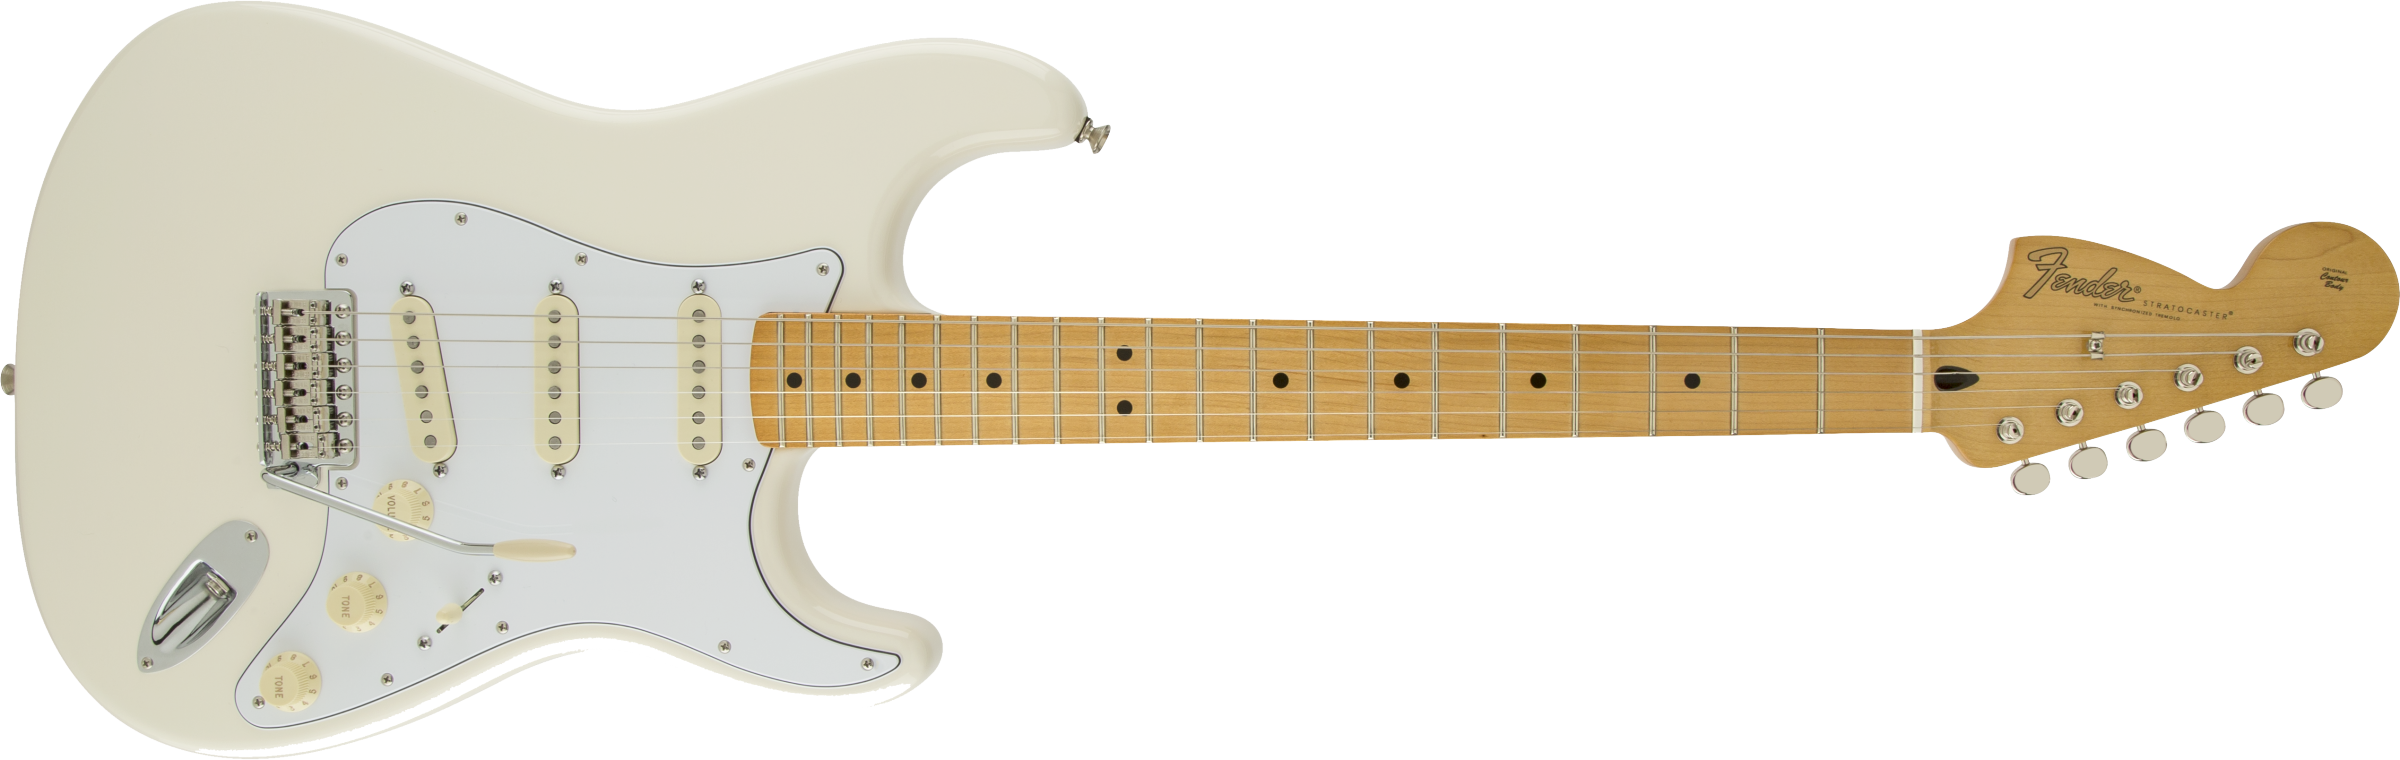 Jimi Hendrix Stratocaster®, Maple Fingerboard, Olympic White